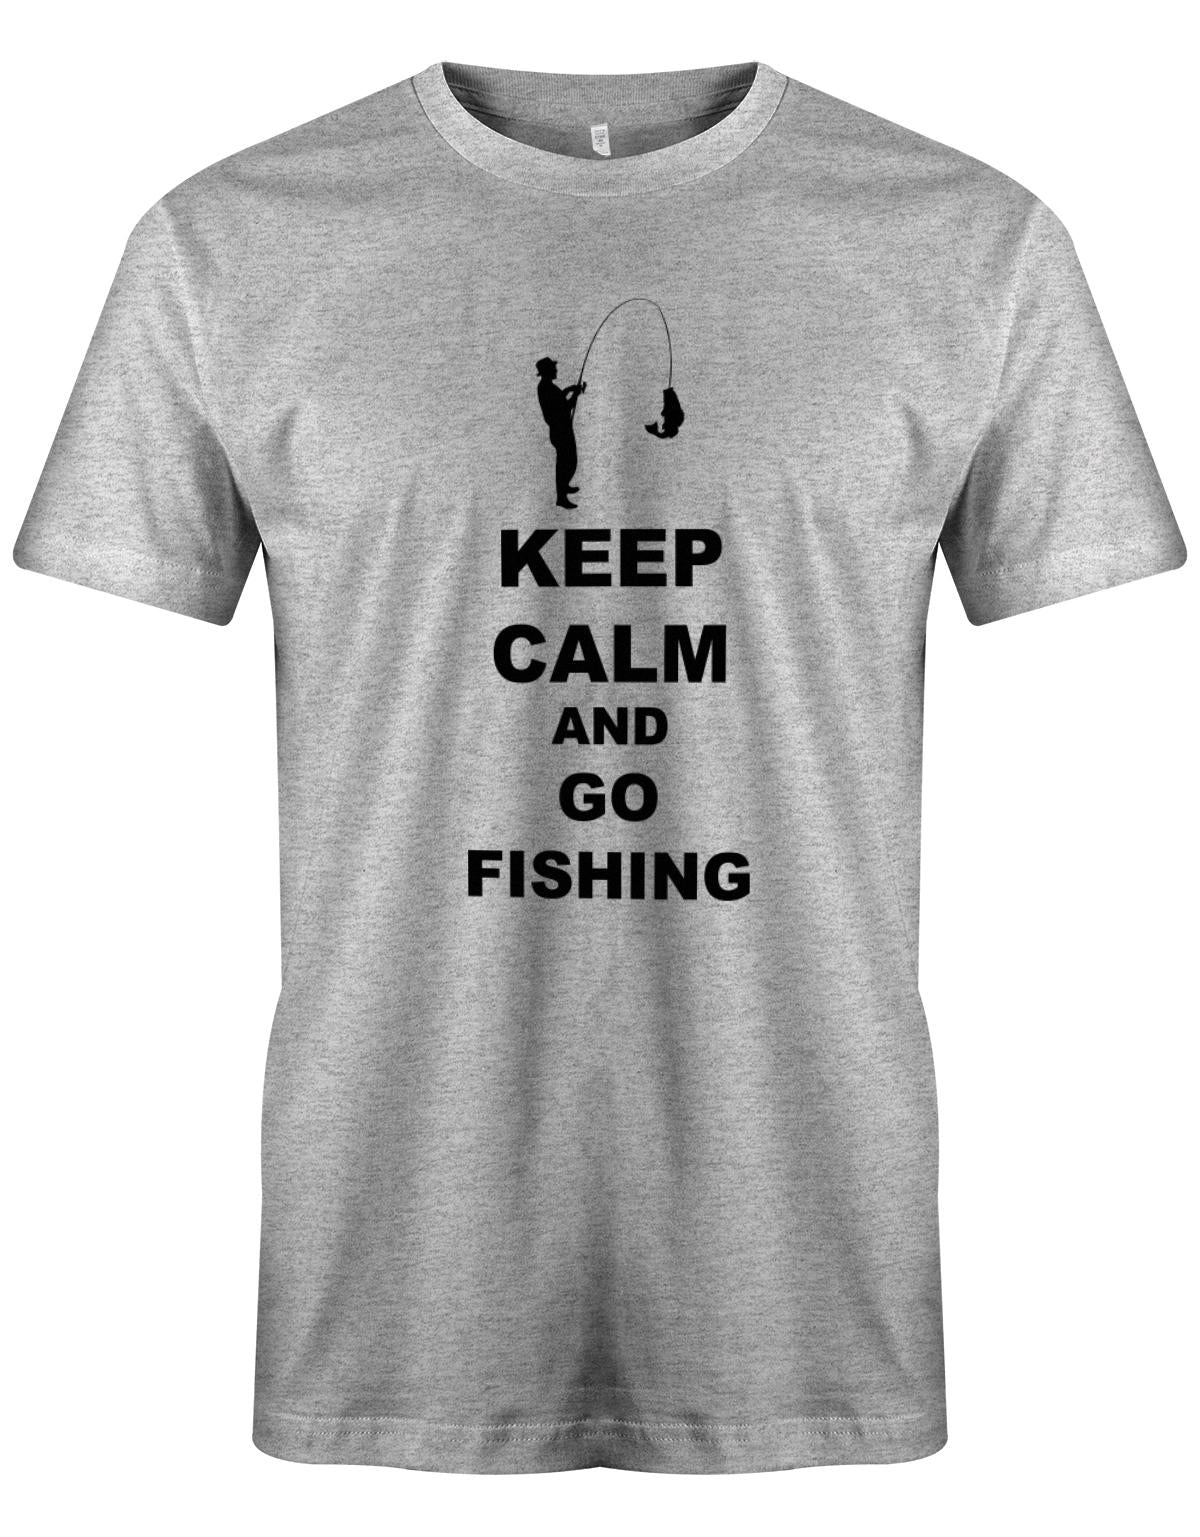 Keep-Calm-and-go-Fishing-herren-Shirt-Grau